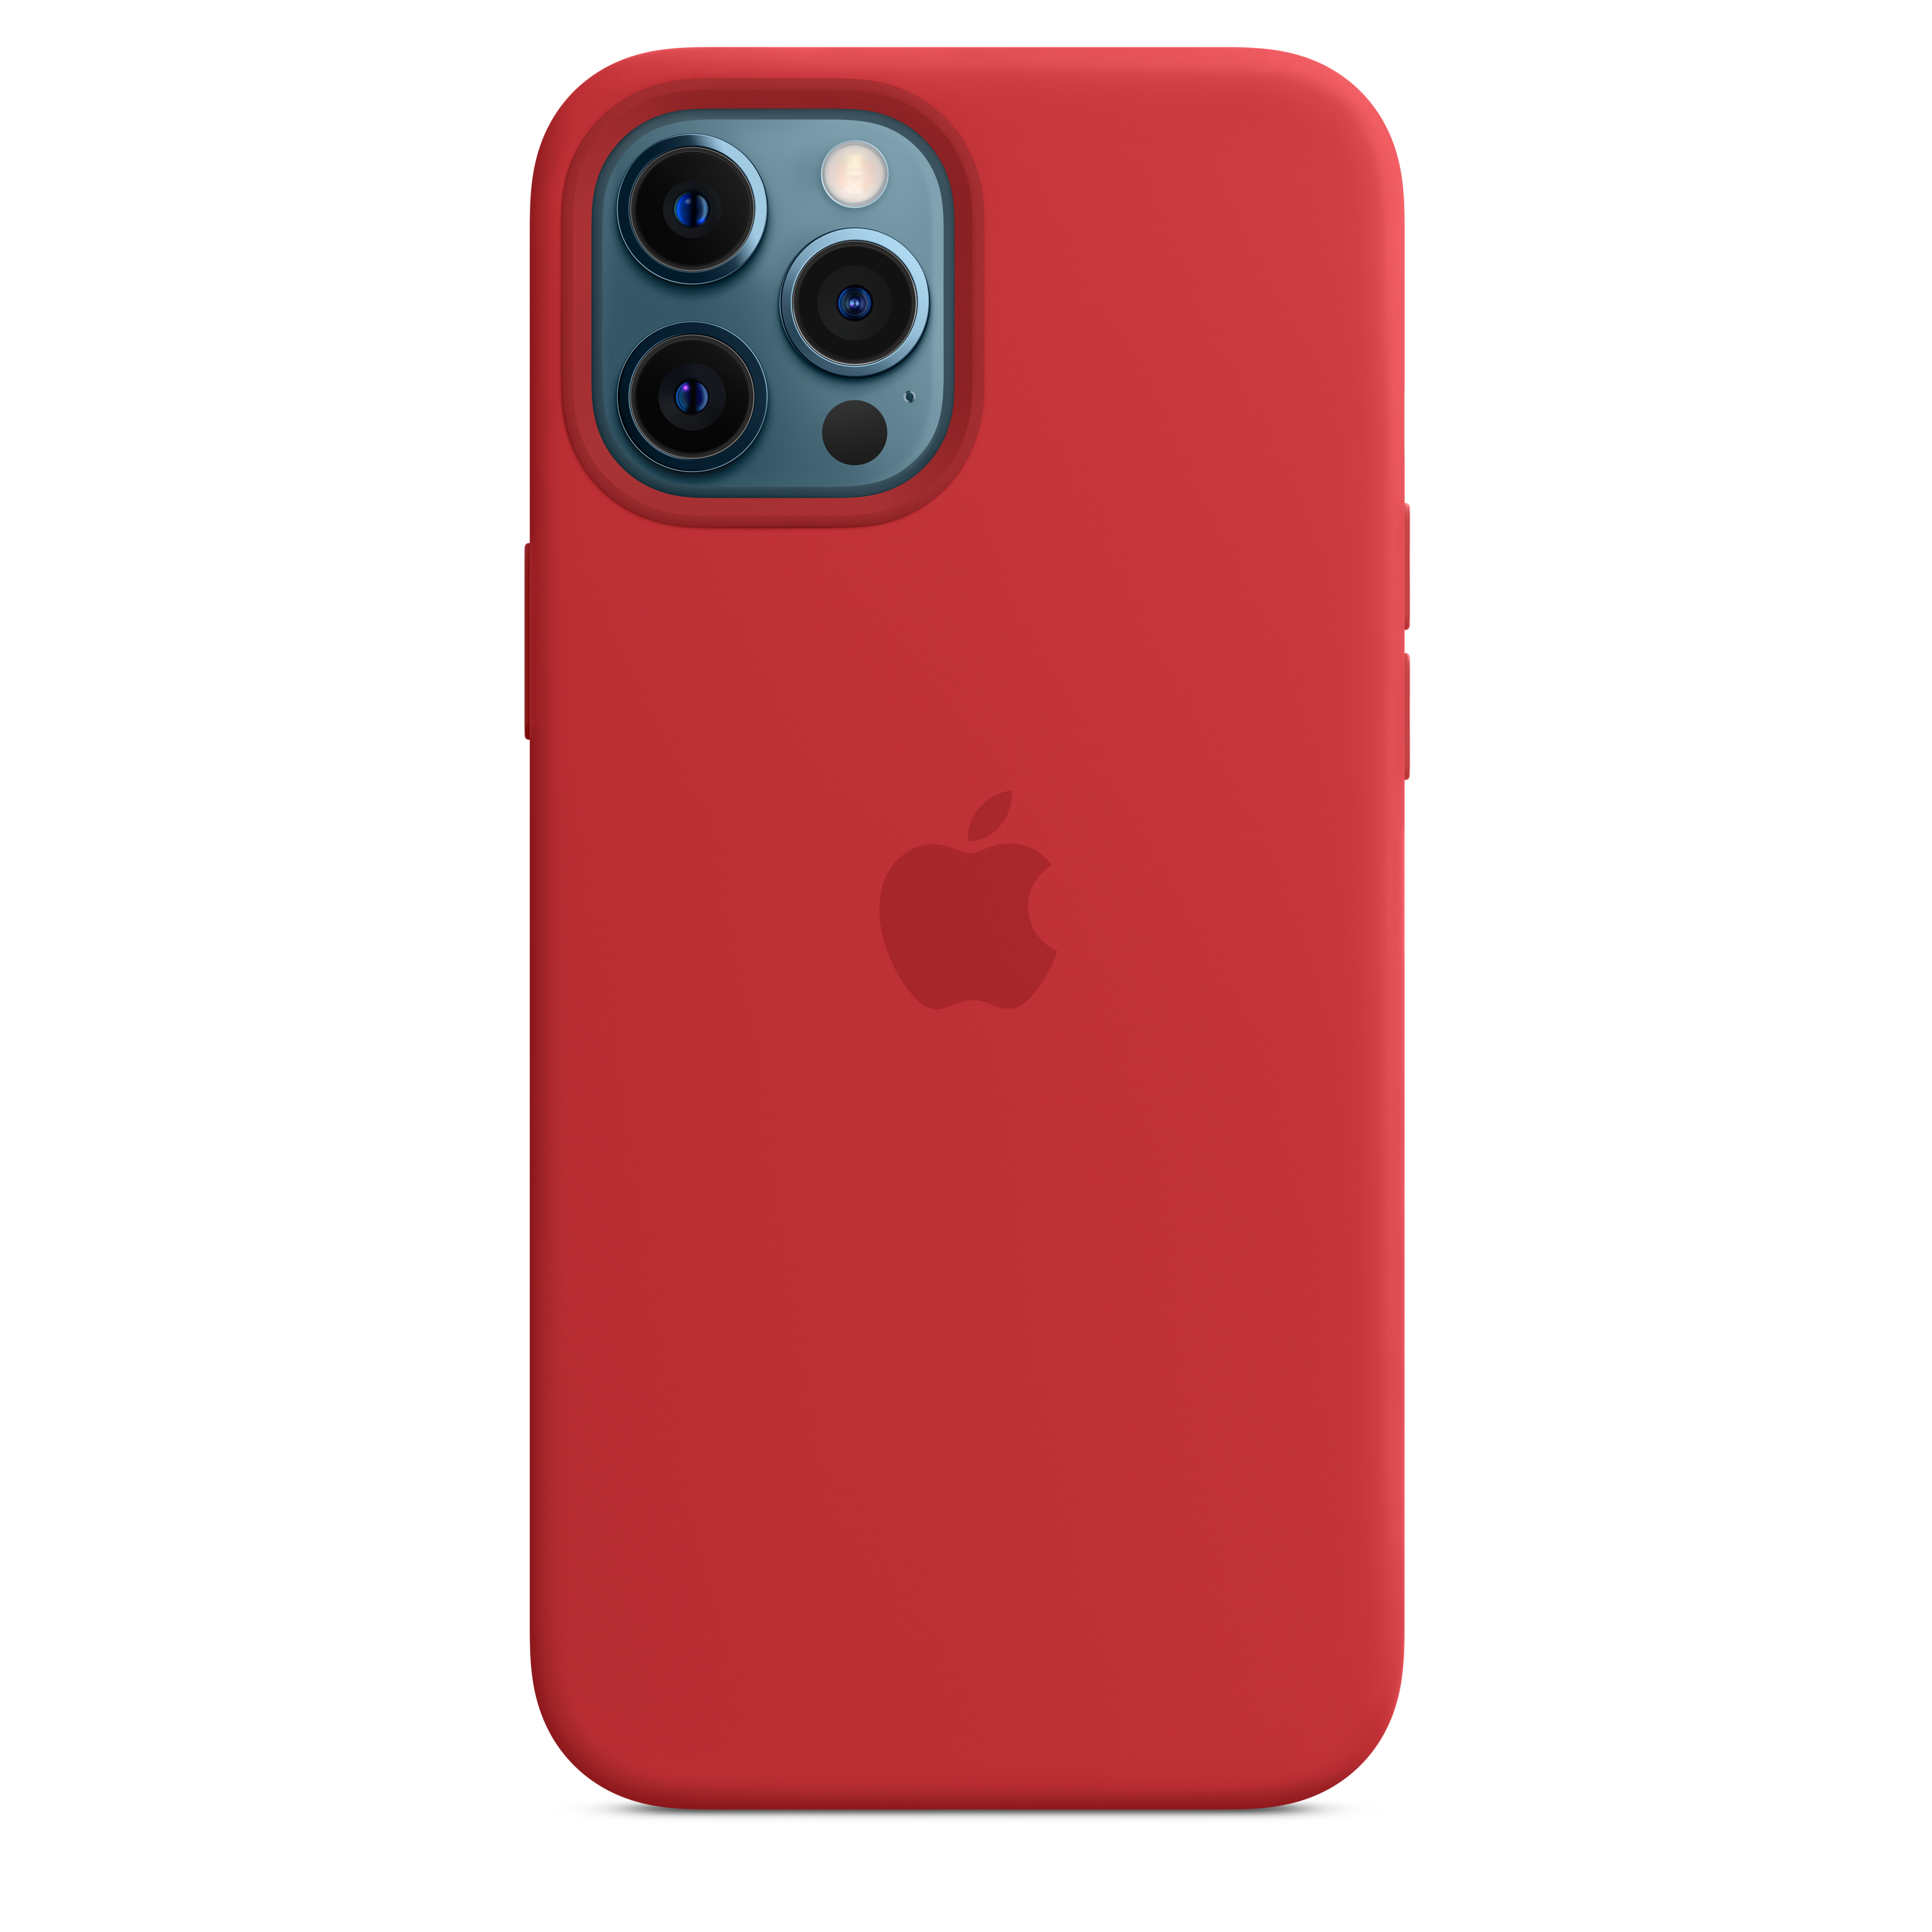 Caja Apple iPhone 12 Pro Max con Protector de Ecuador